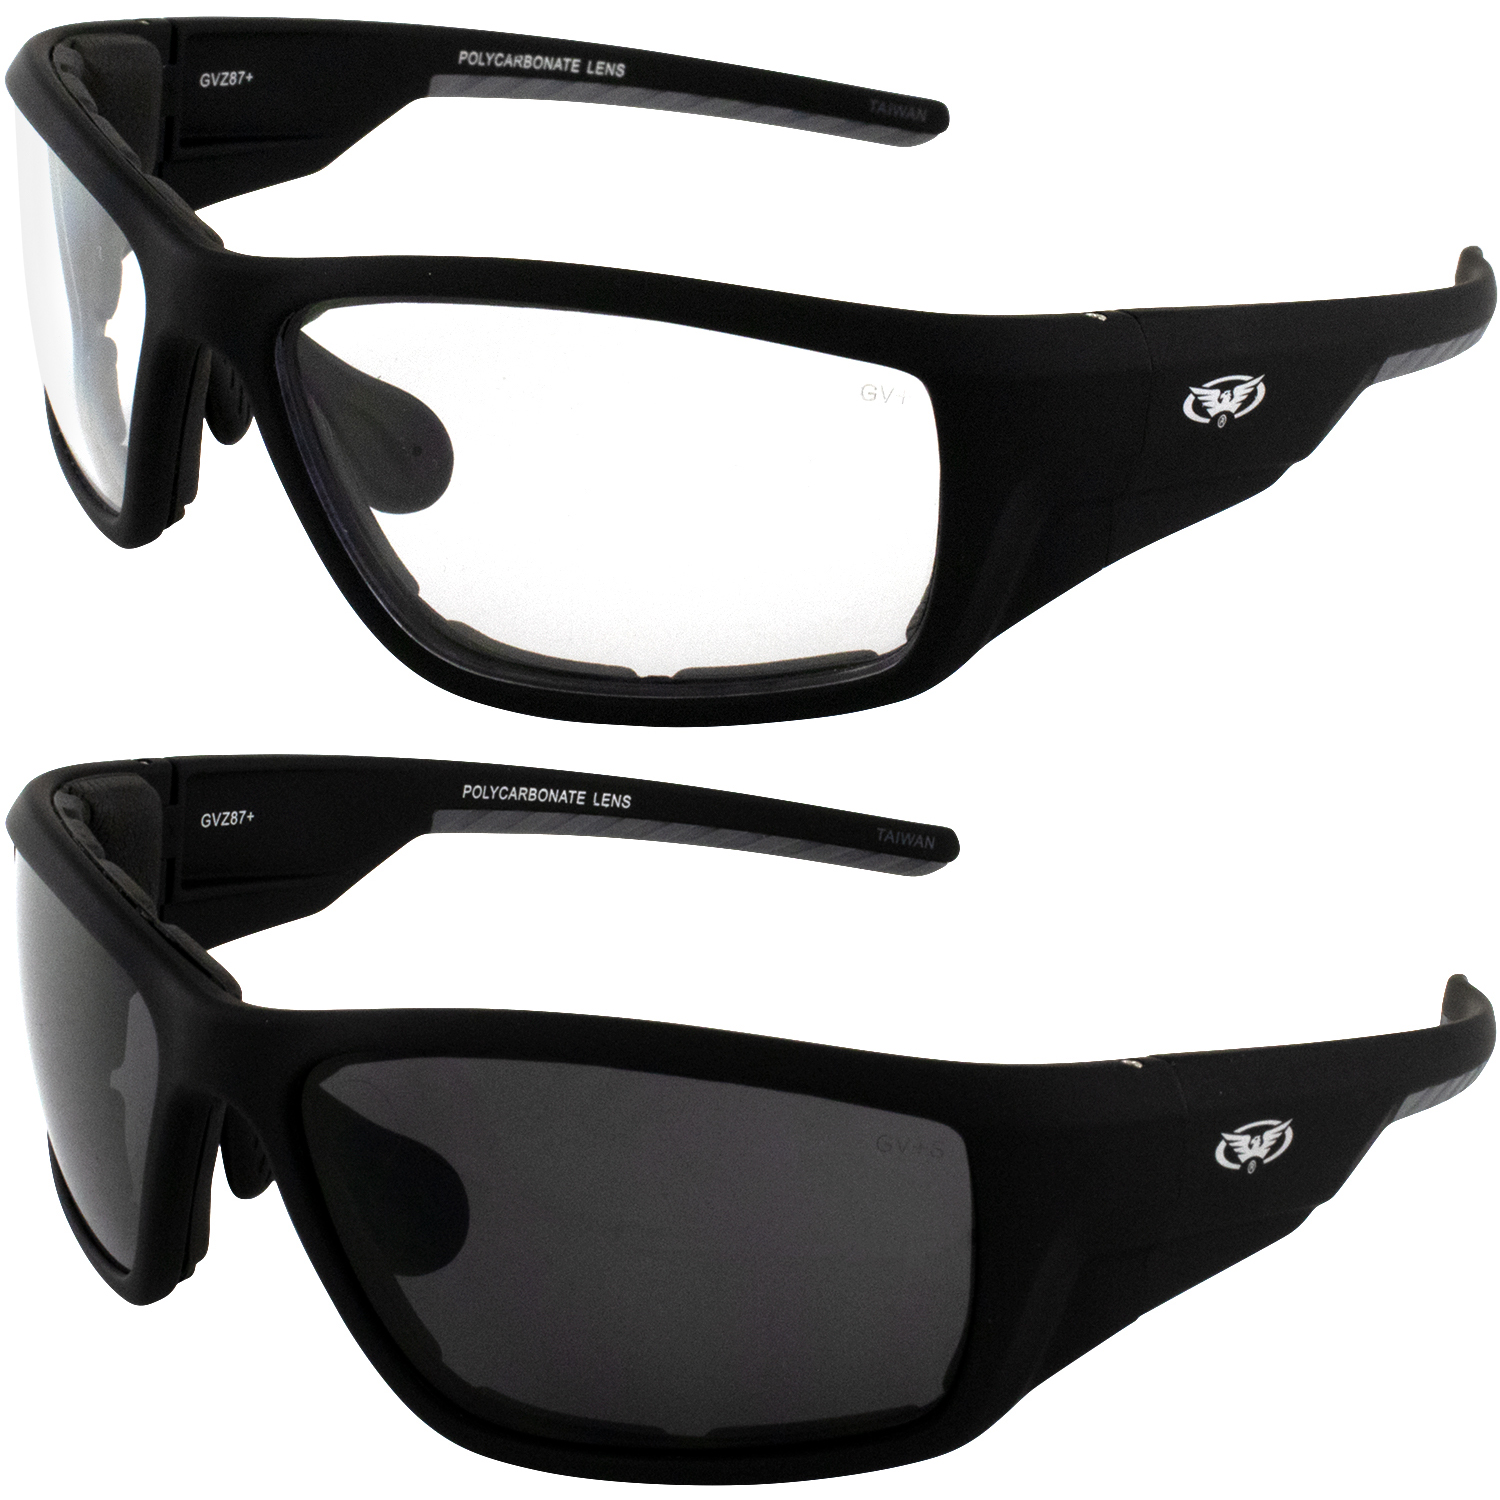 Clear Lens Global Vision Eyewear Kickback Sunglasses with EVA Foam Soft Touch Black Frame